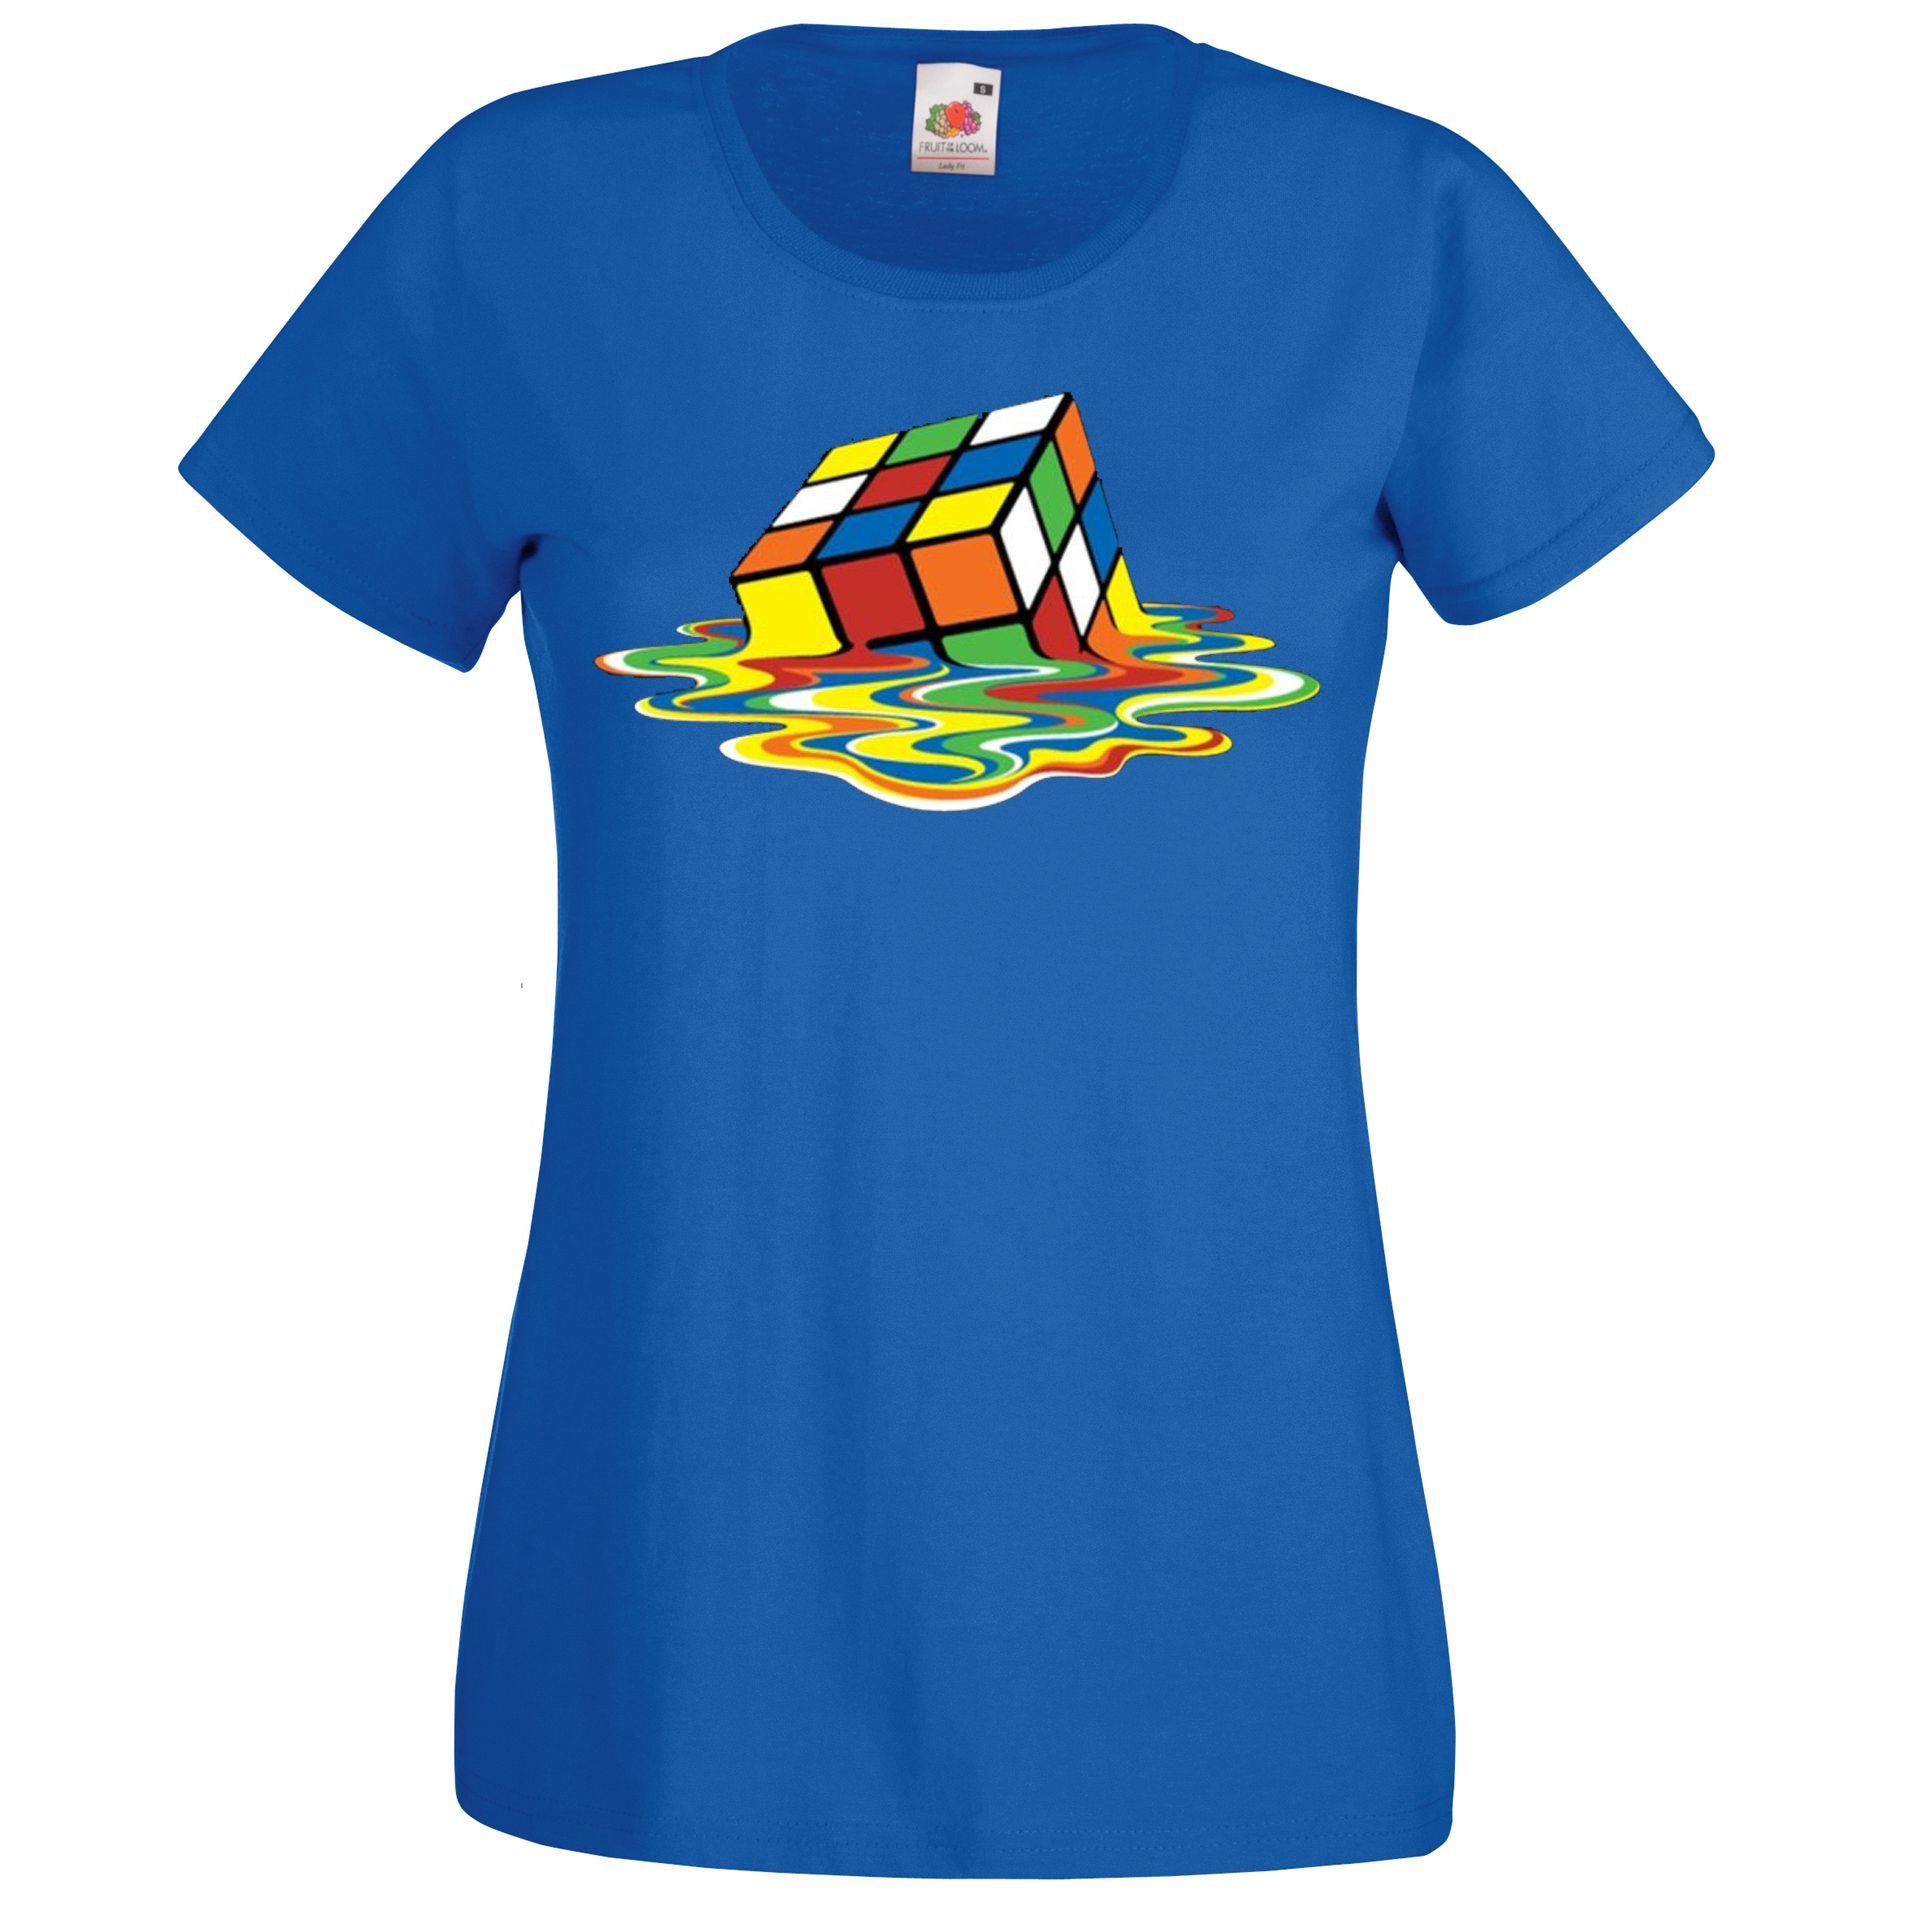 Youth Designz T-Shirt Zauberwürfel Damen mit Royalblau Shirt witzigem Frontprint